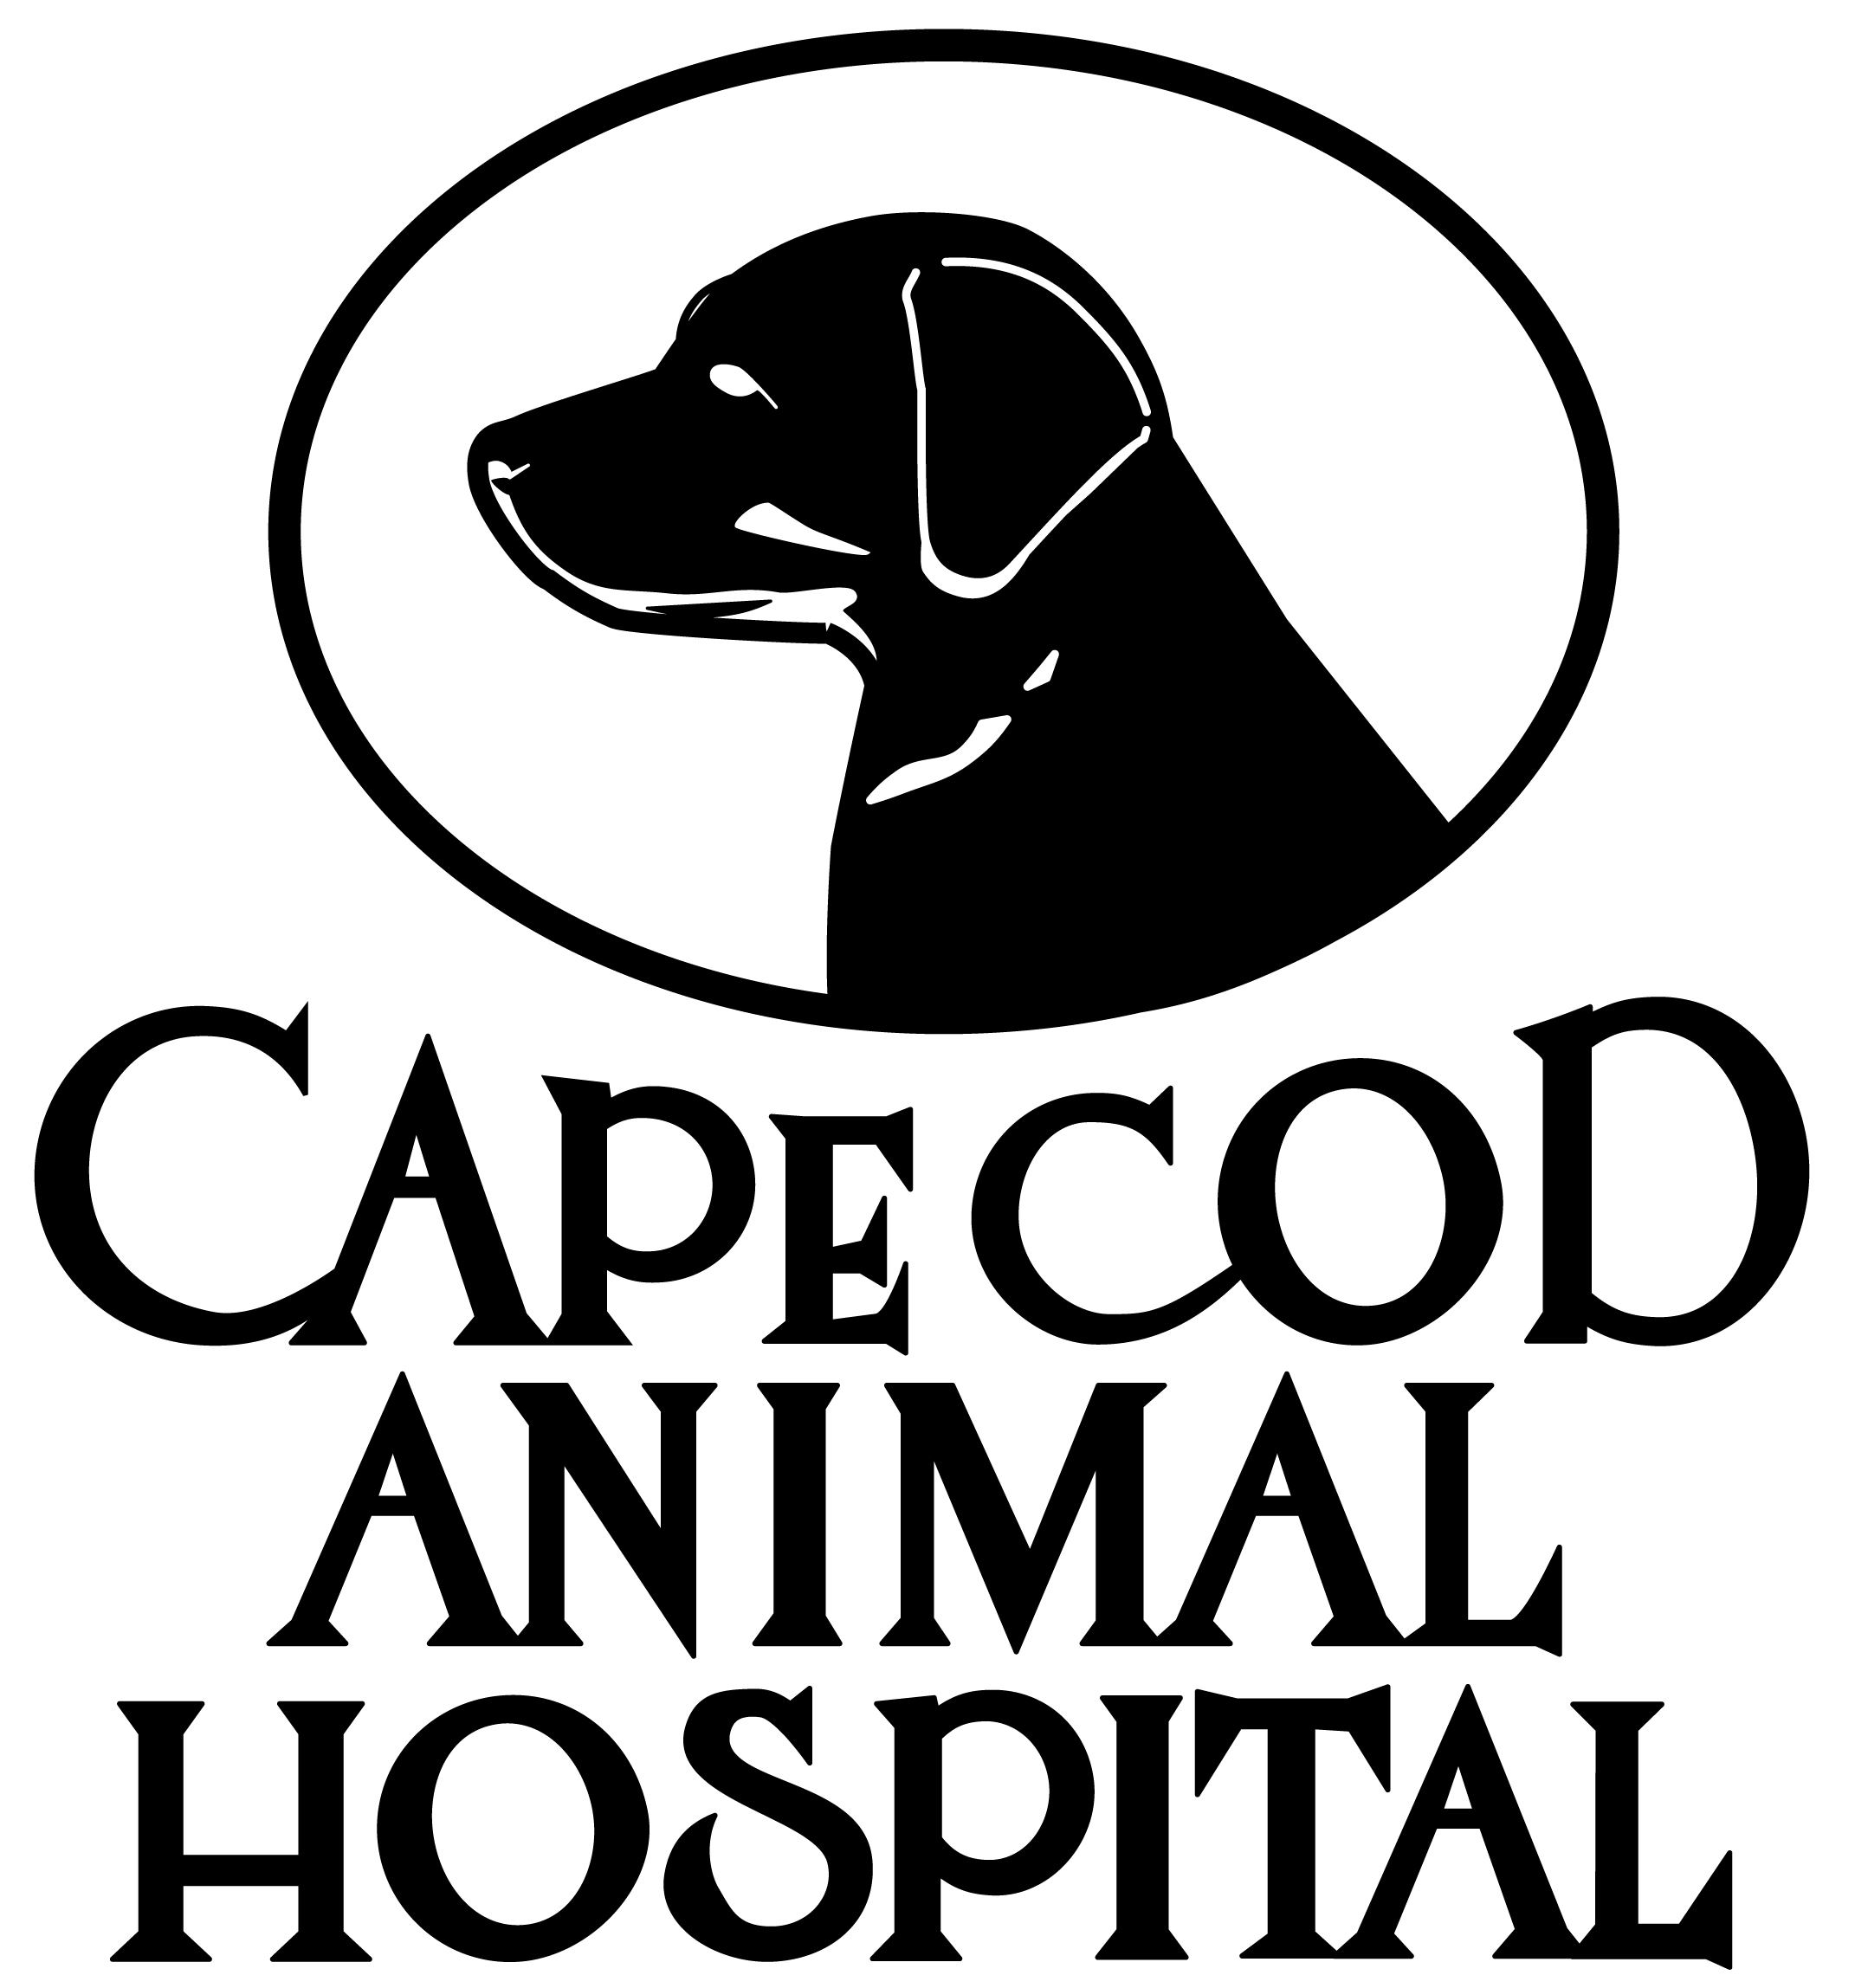 Cape Cod Animal Hospital logo